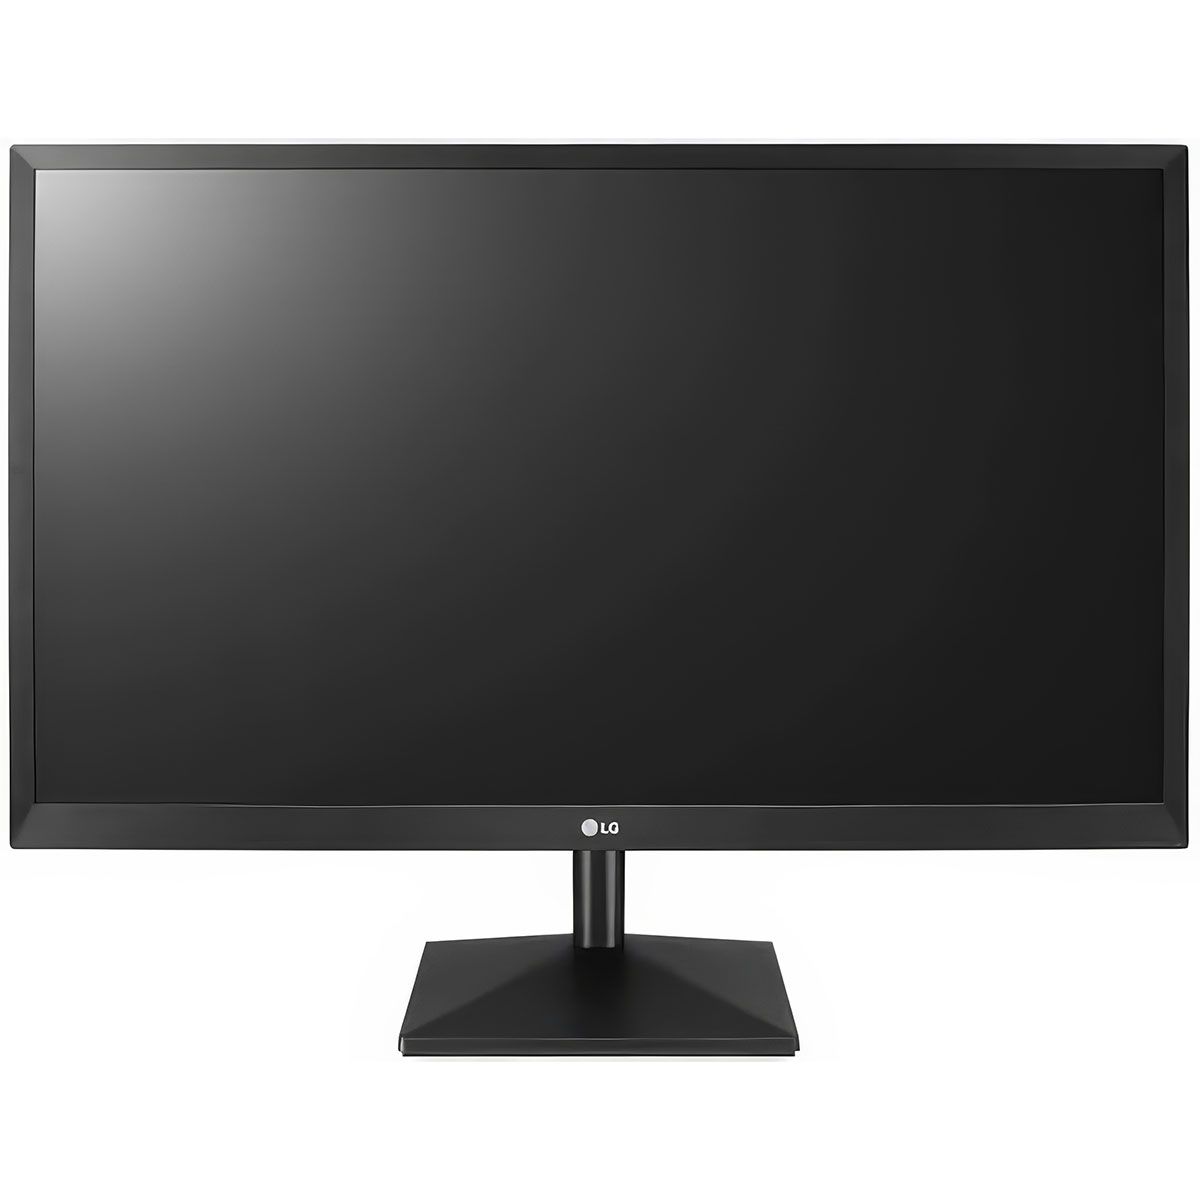 LG 27-Inch FHD (1920x1080) TN Panel Monitor -Black (27BK400H-B)